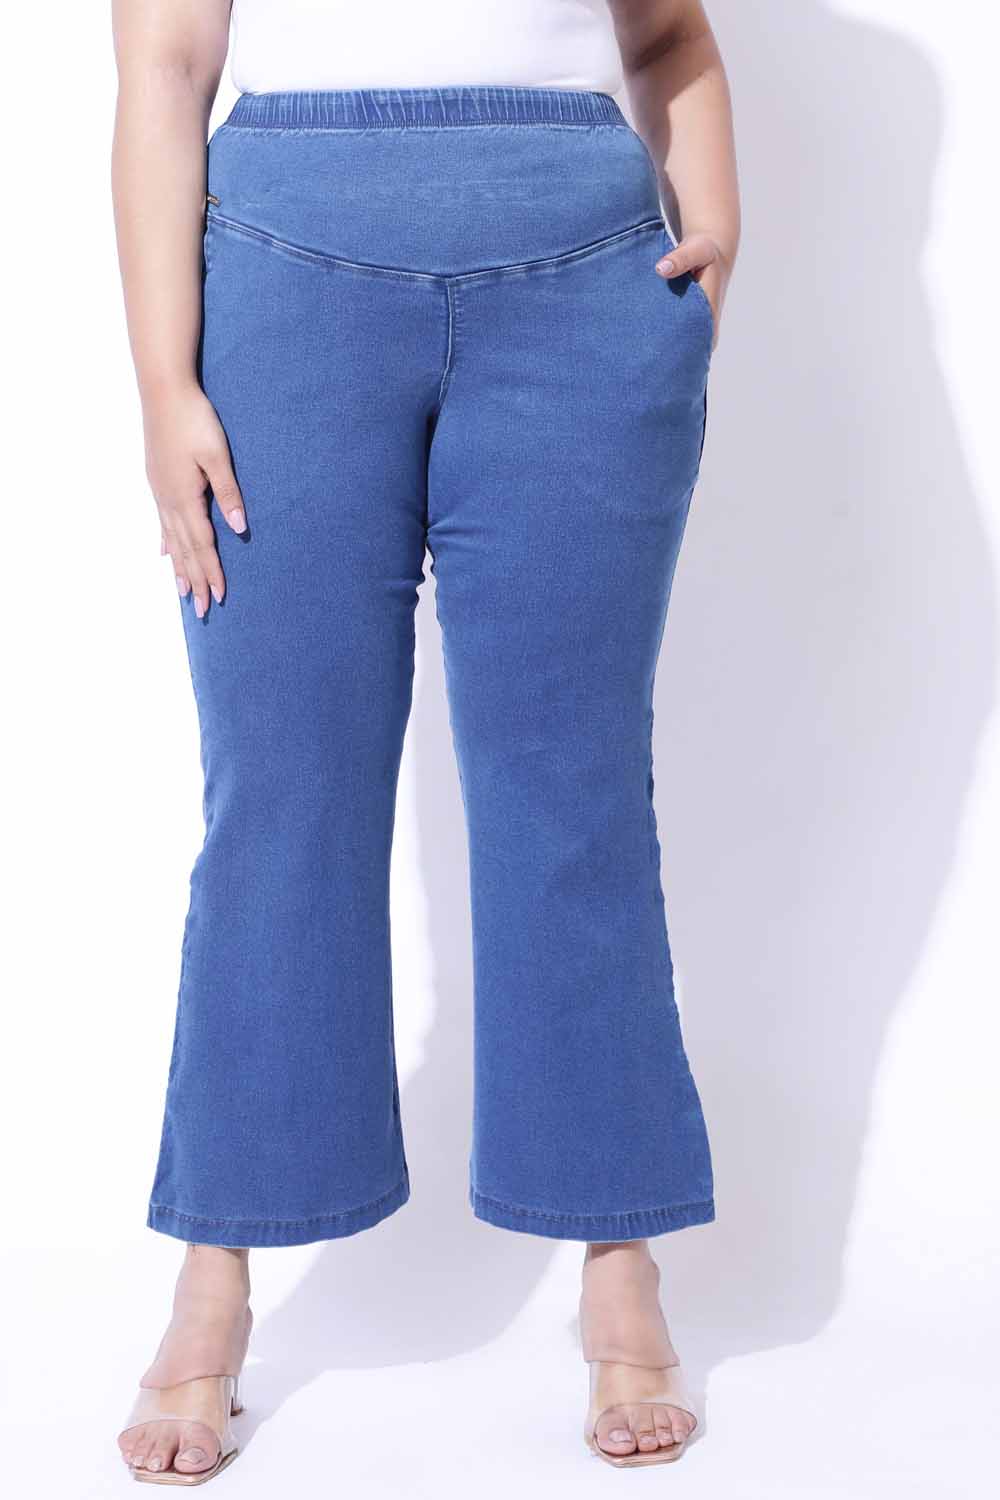 JD/TS Women Plus Size Plus Size Pull On Denim Jeans Pants 0X 1X 2X 3X 4X 5X  